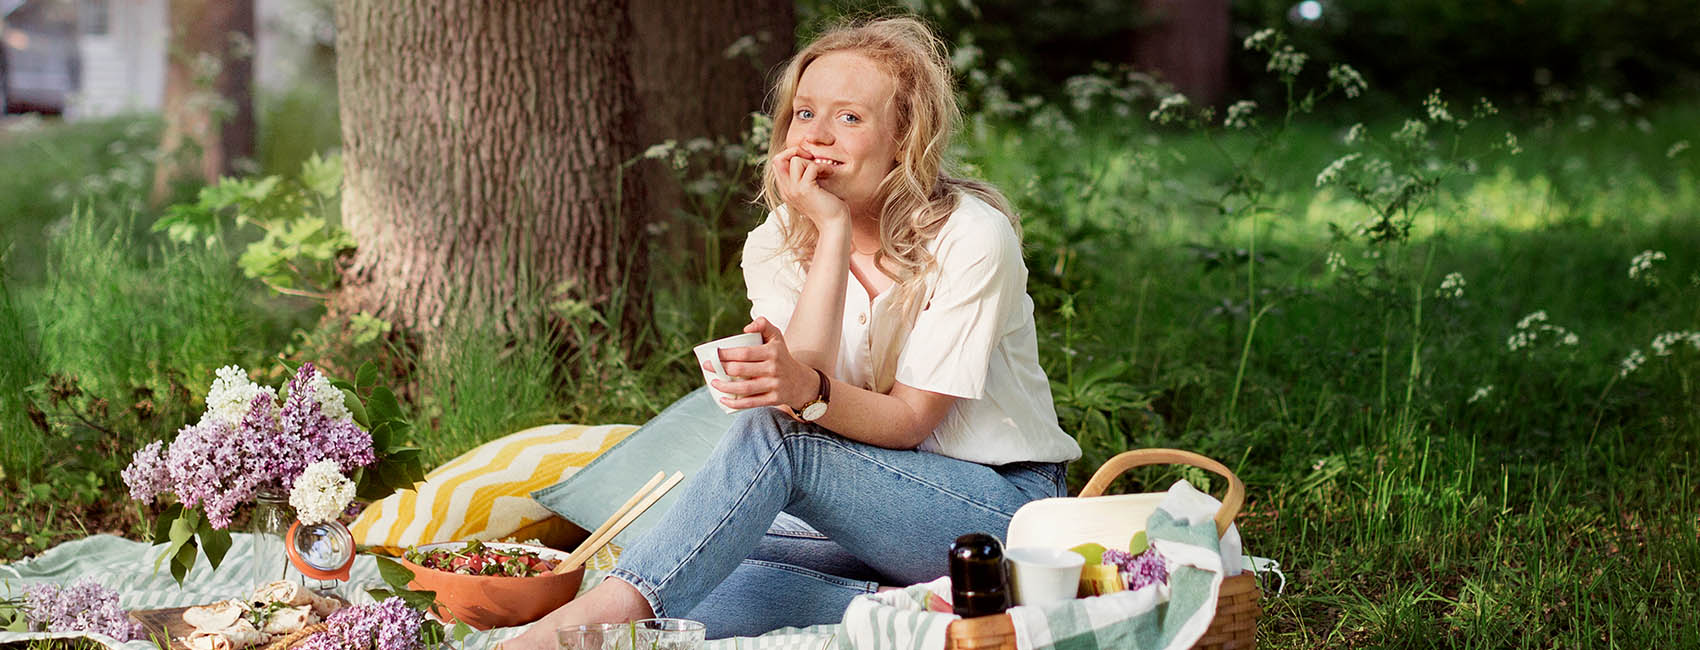 woman having a picnic